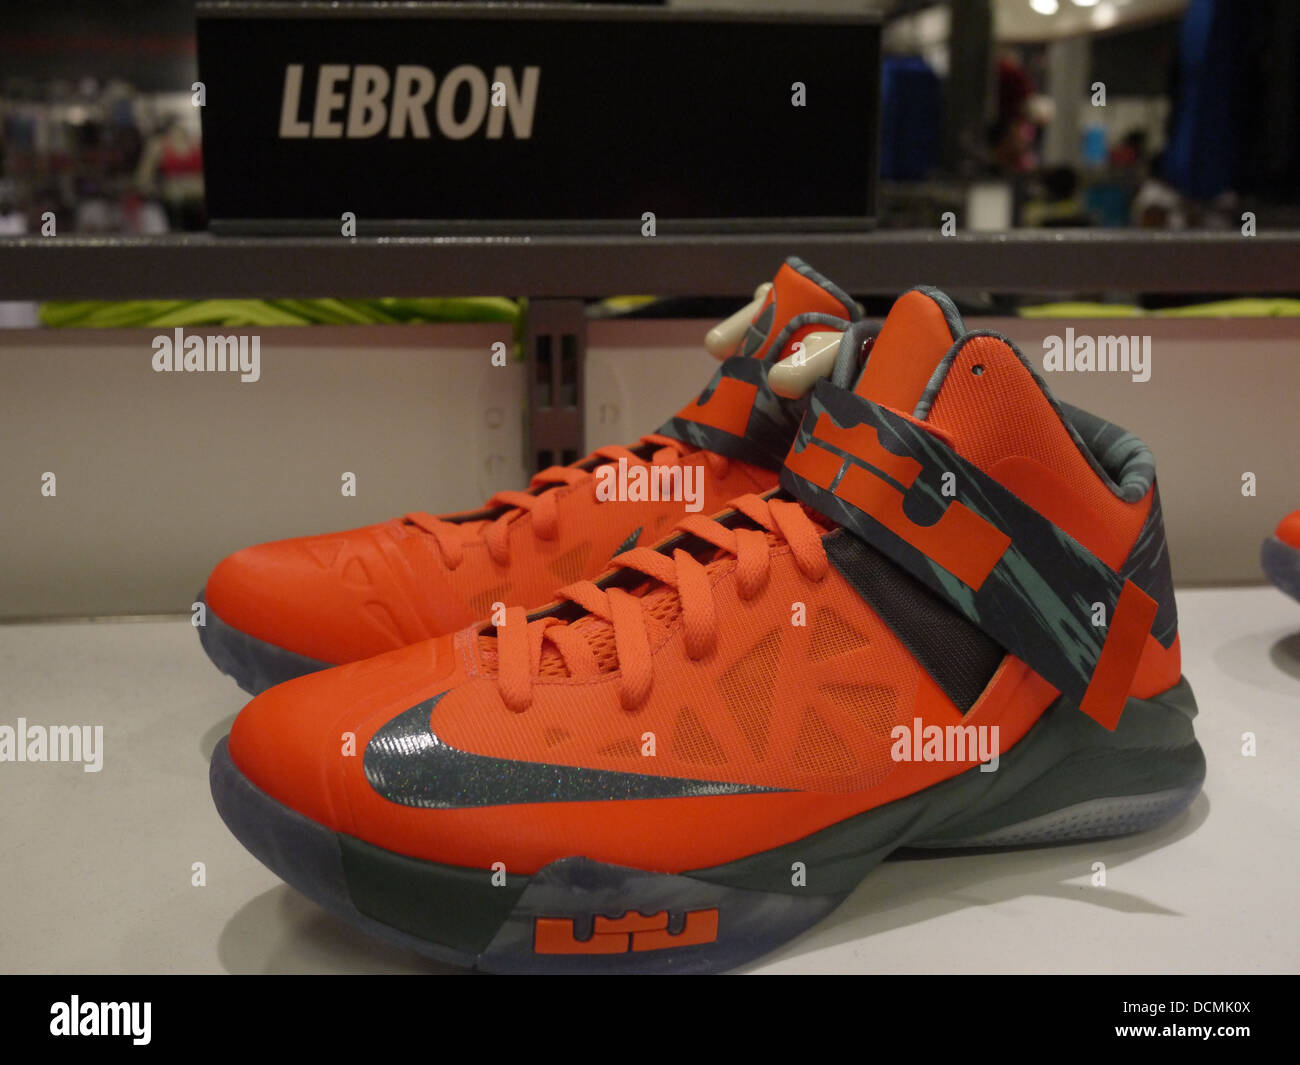 lebron signature nike basketball shoe Stock Photo